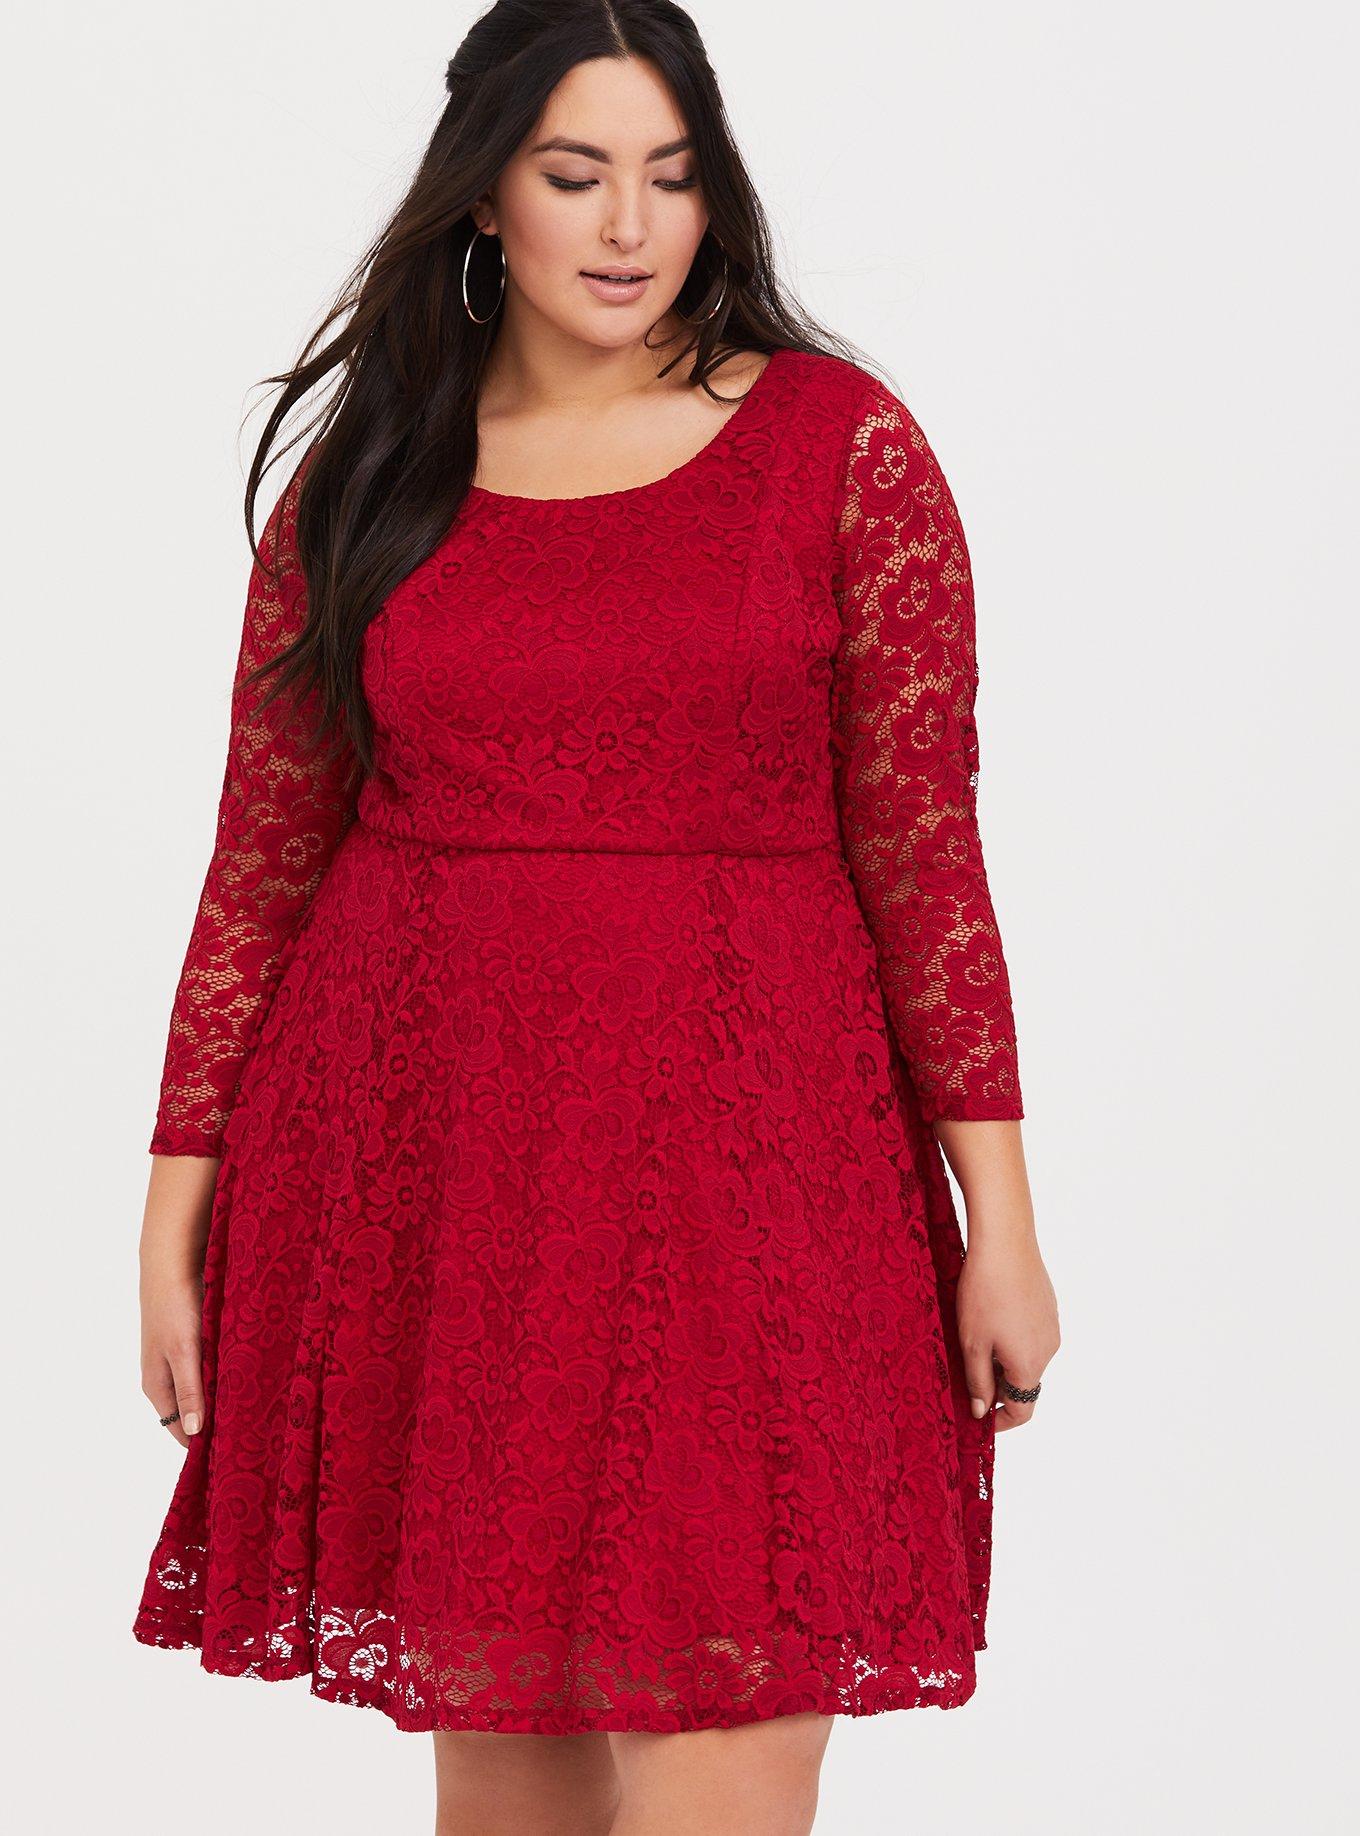 Plus Size - Red Lace Skater Dress - Torrid